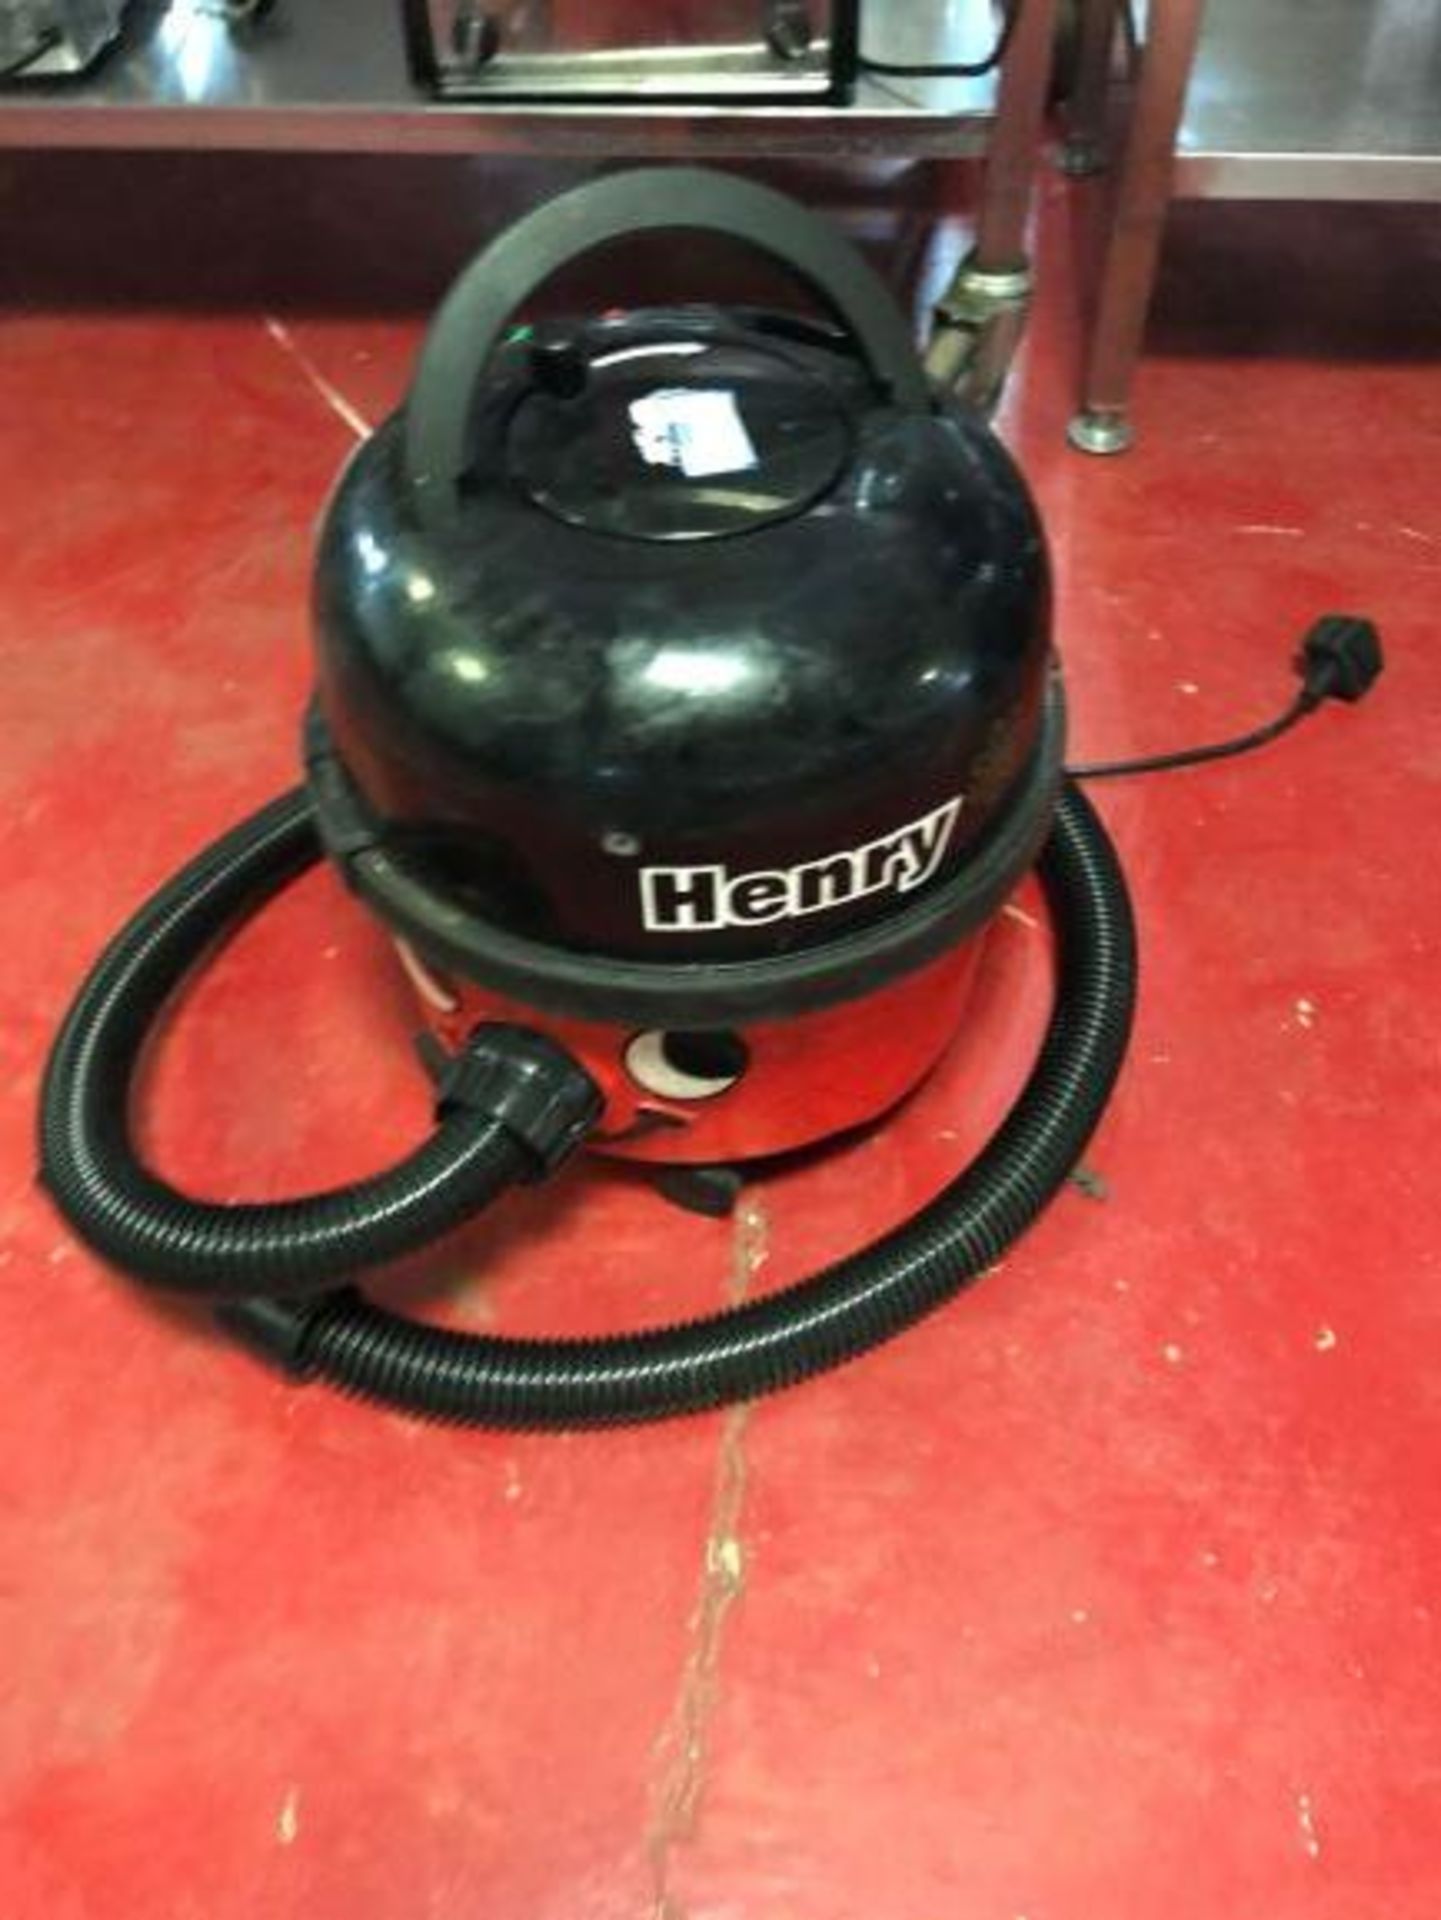 Numatic International Henry 200 Vacuum Cleaner - Image 2 of 2